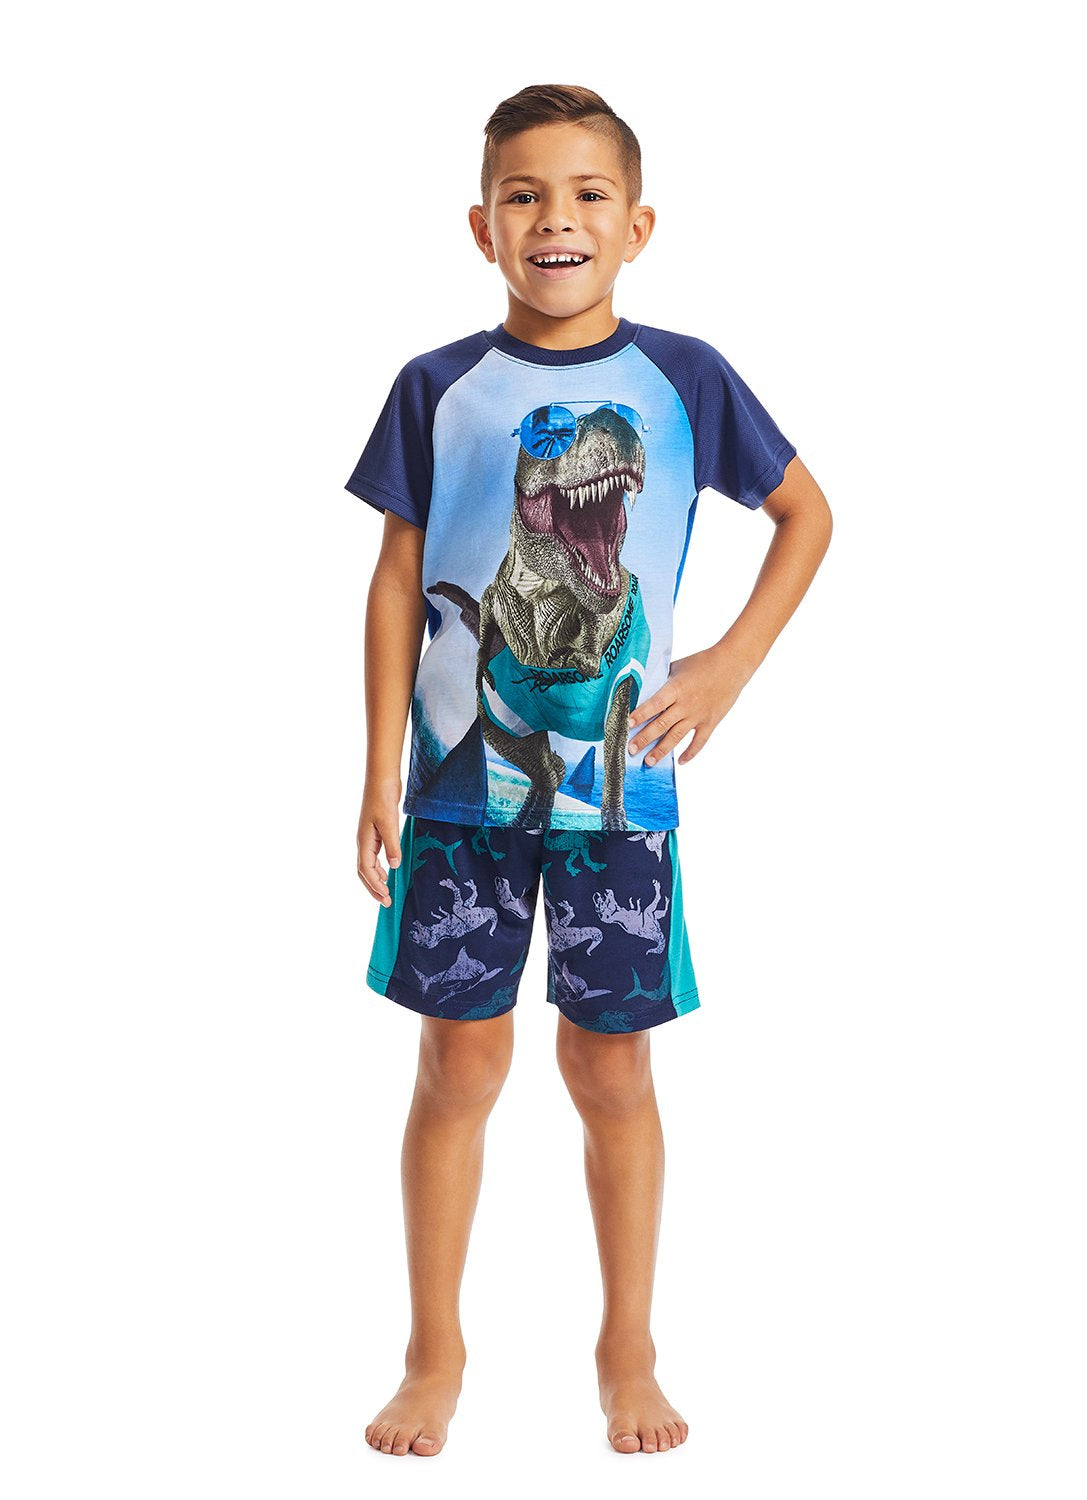 Boy wearing Dino pajama set, t-shirt and shorts